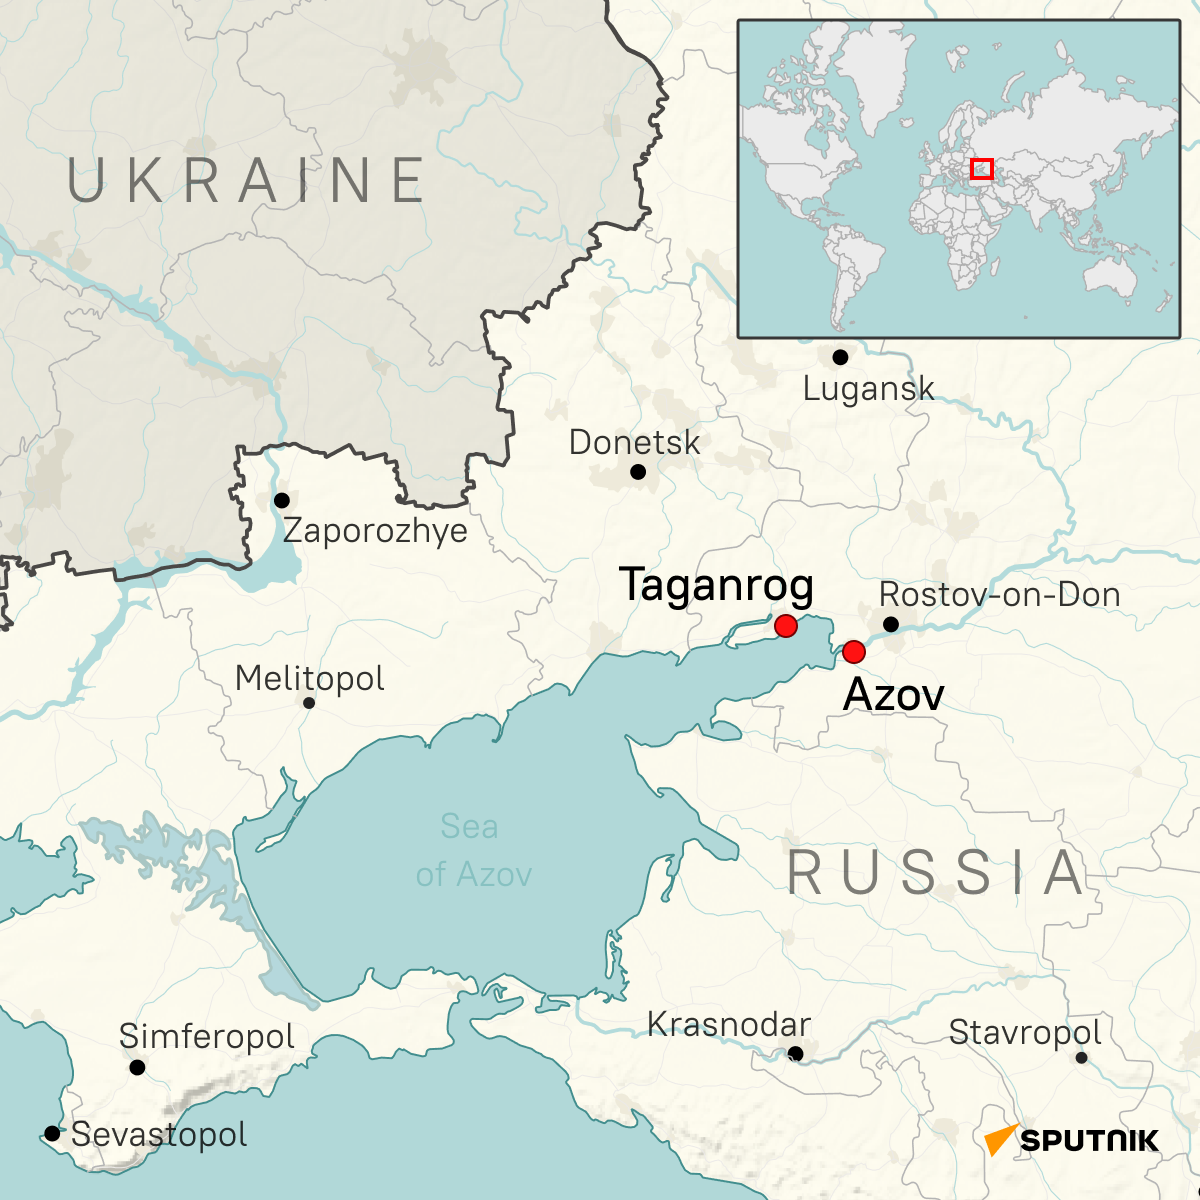 Taganrog, Russia - Sputnik International